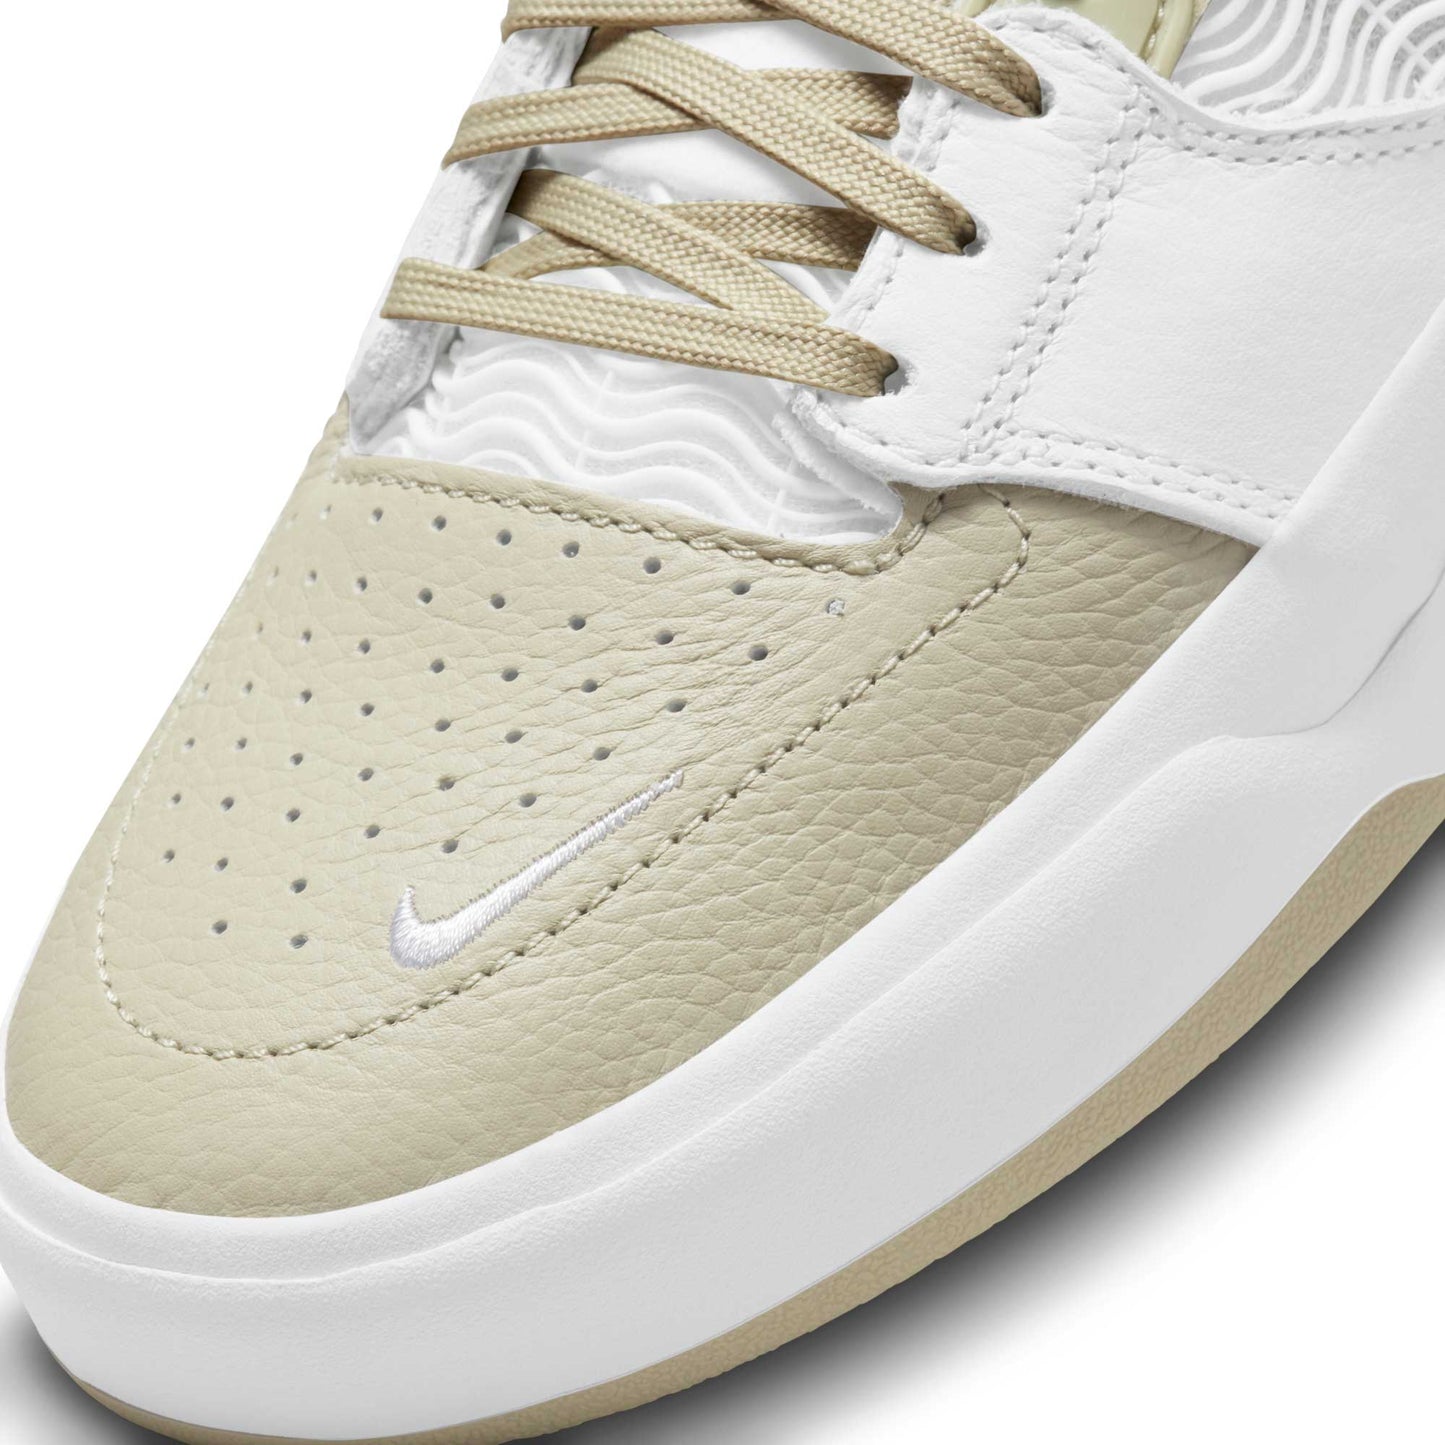 Nike SB Ishod Wair Premium, light stone/khaki-summit white-white - Tiki Room Skateboards - 9